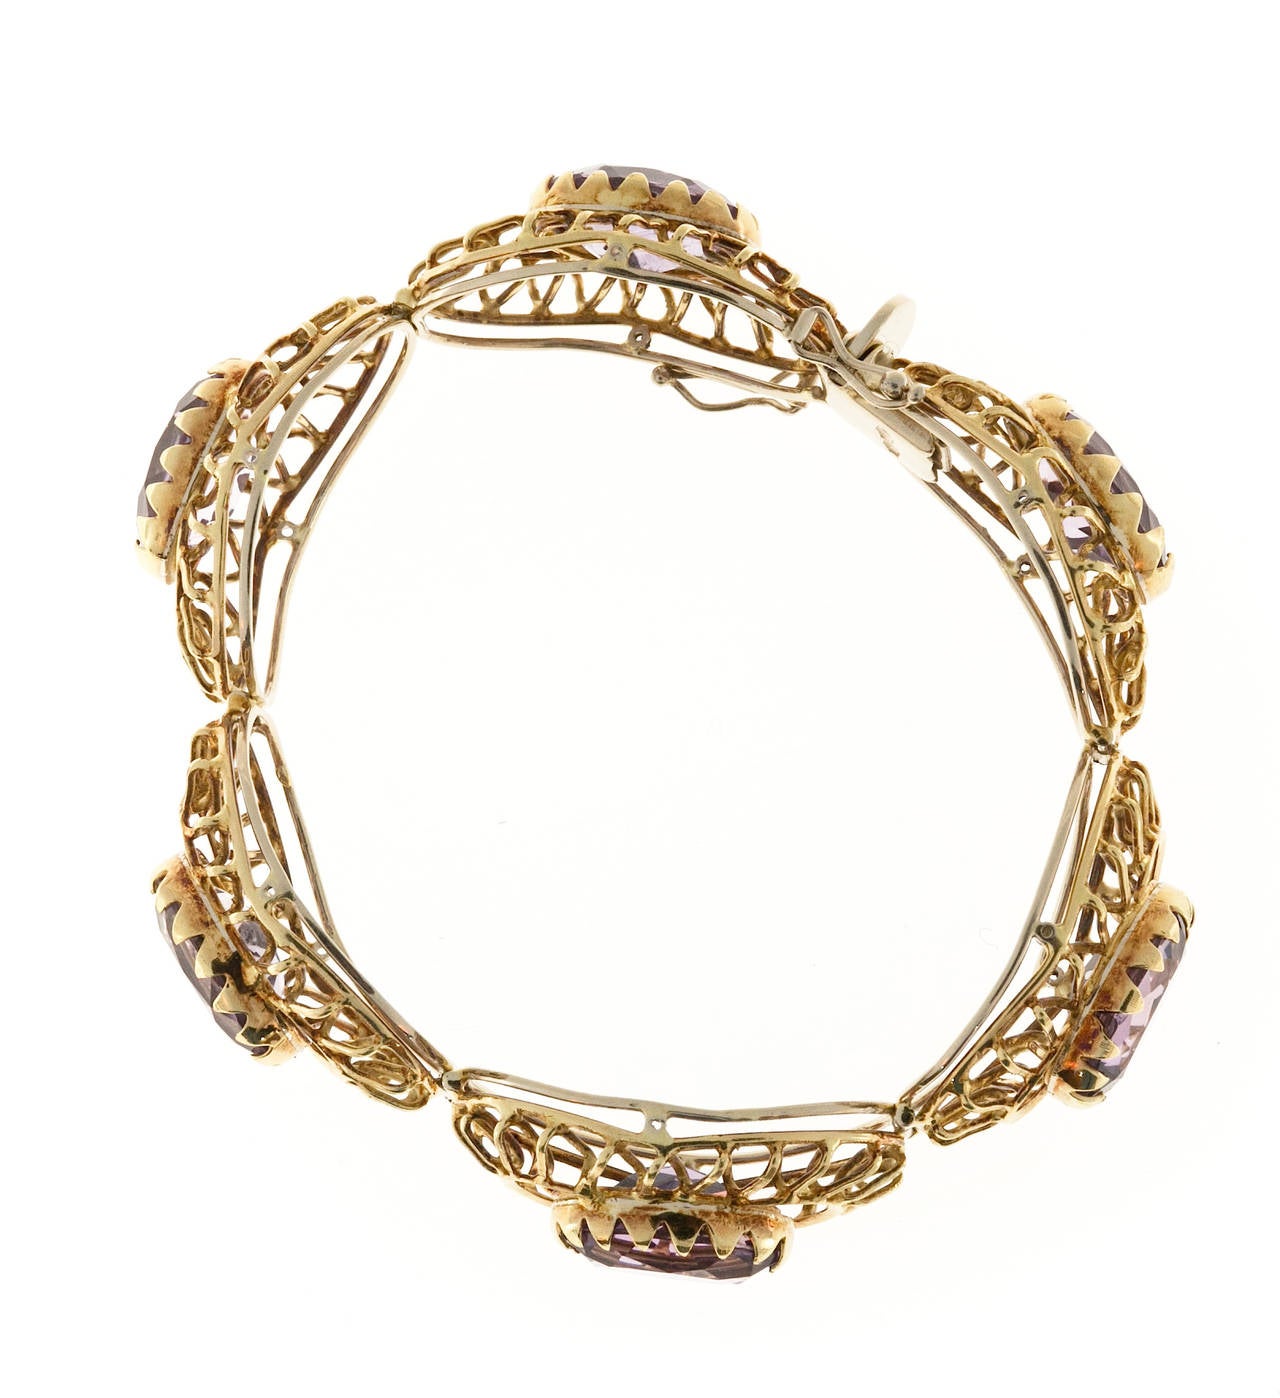 Oval Amethyst Gold Hinged Bracelet For Sale at 1stdibs